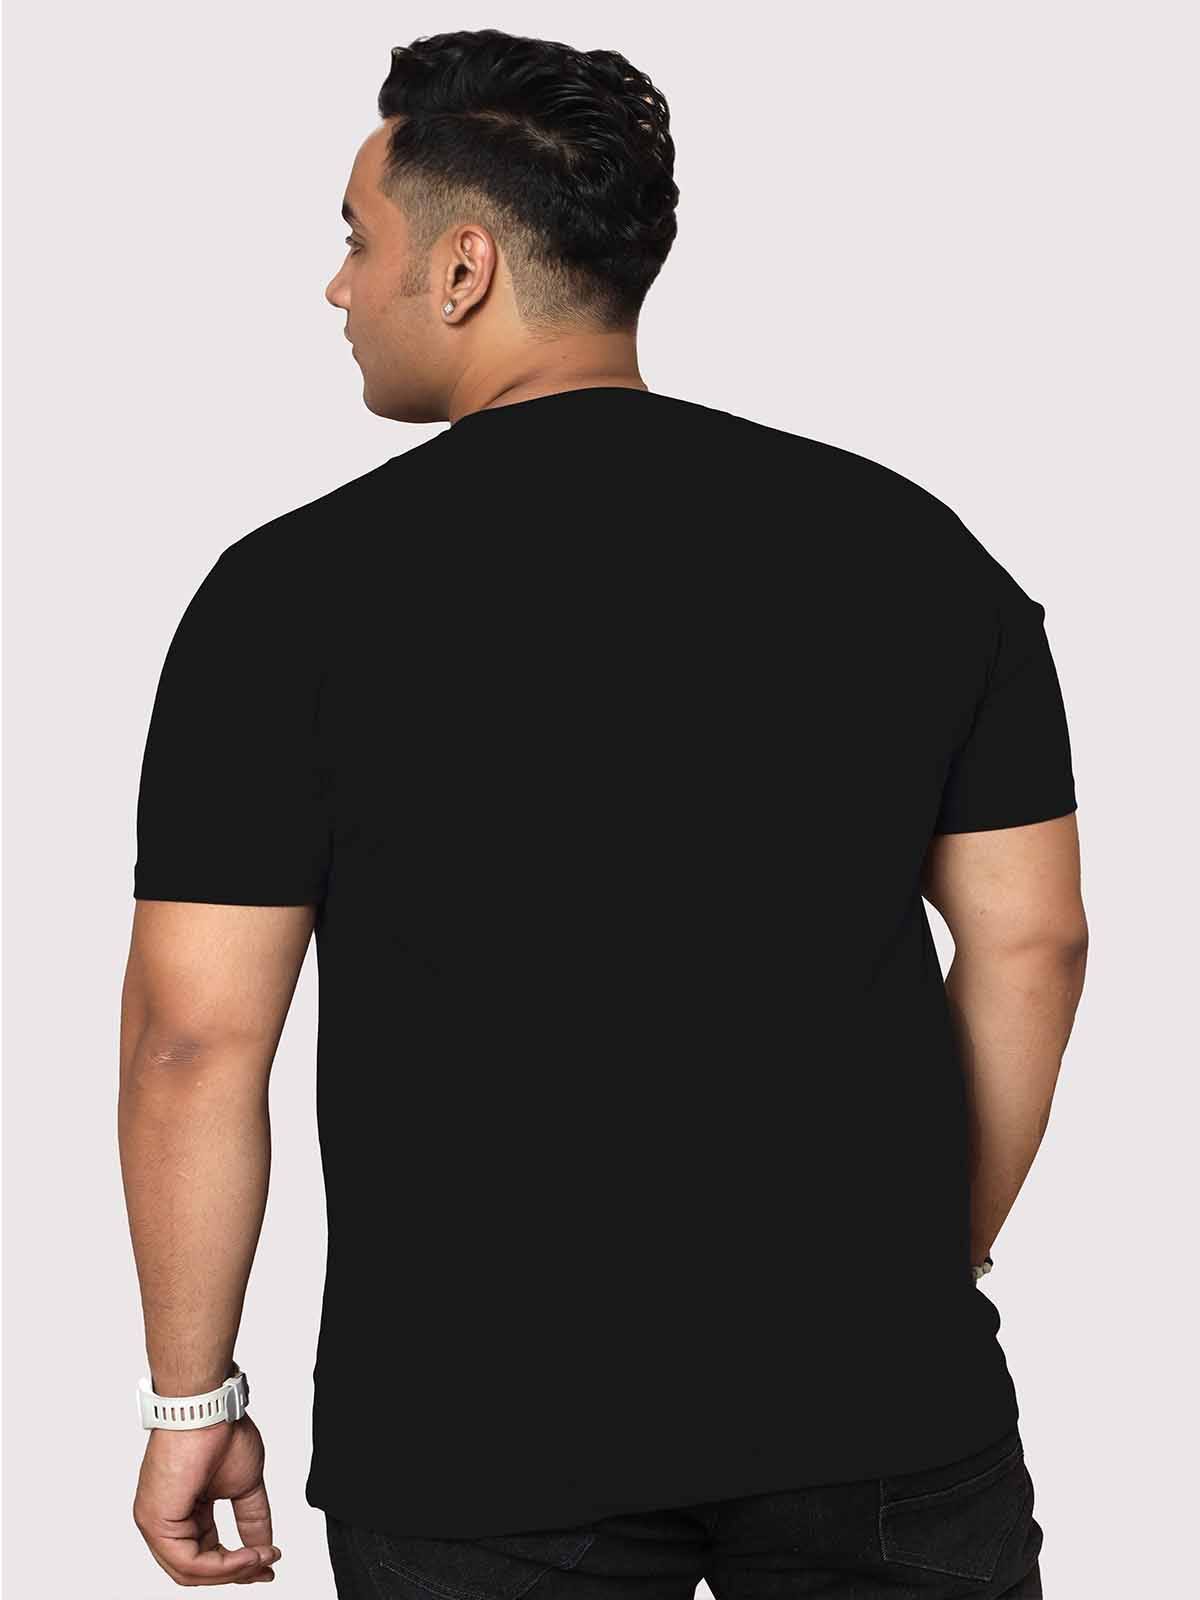 Men Plus Size Black 'Little But Loud' Printed Round Neck T-Shirt - Guniaa Fashions